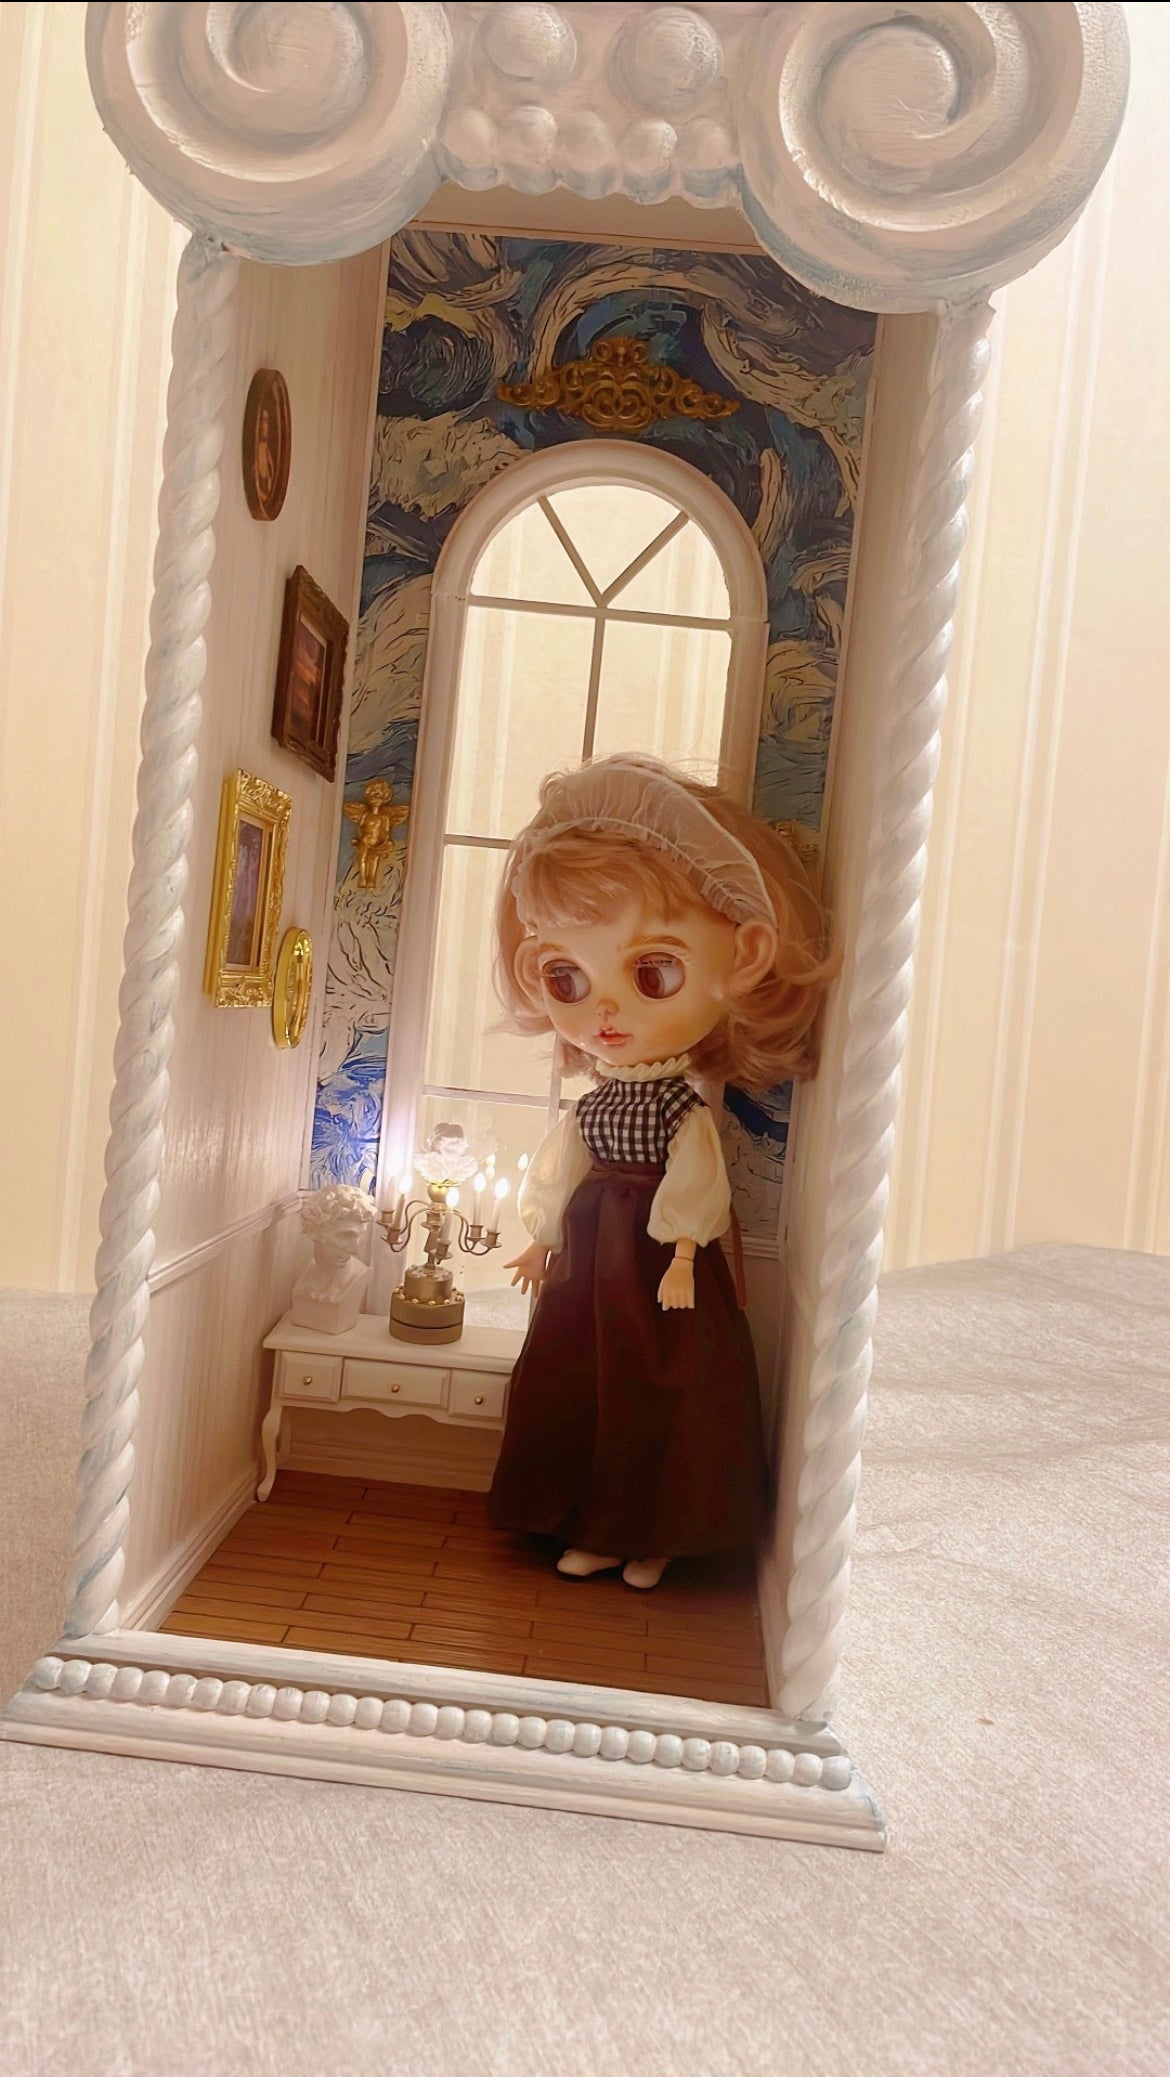 Blythe/BJD dollhouse dioramaroom French room box DOLLSHOWCASE/DISPLAYCASE/CARRYCASE for 12" blythe dolls 1:6 BJD/BARBIE/MONSTERHIGH DOLLS18